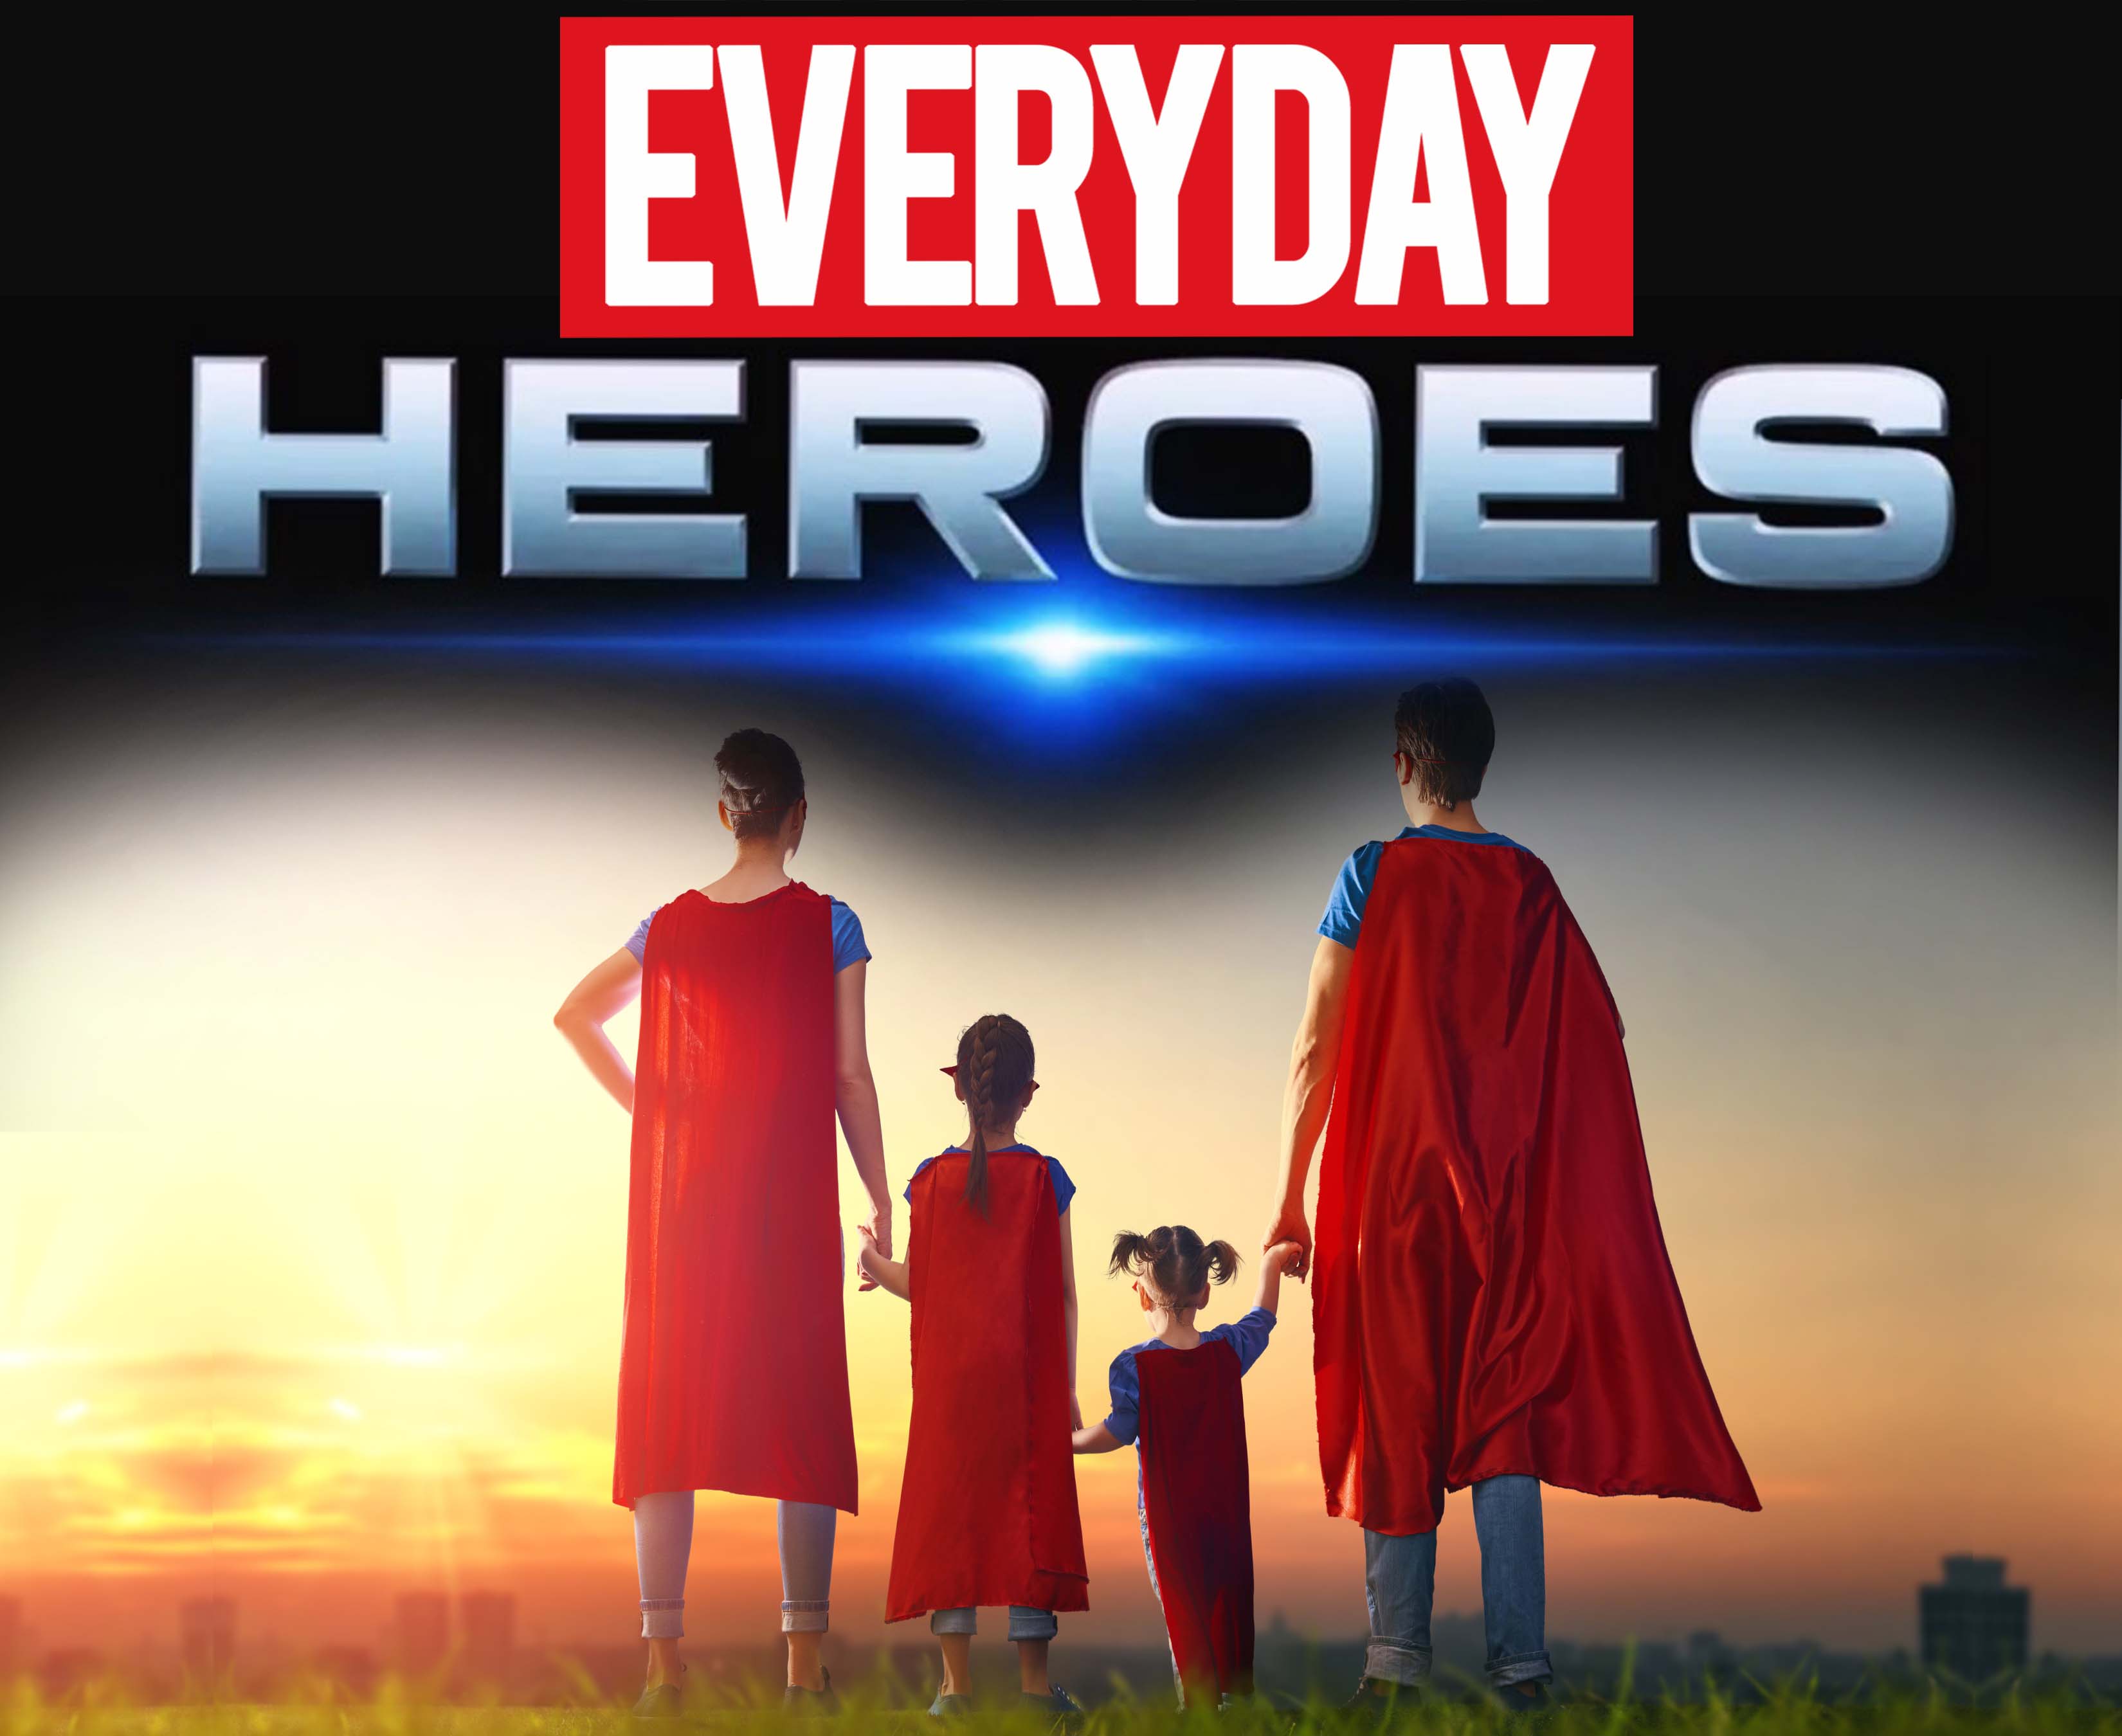 8-20-17 Everyday Heroes - Part 3